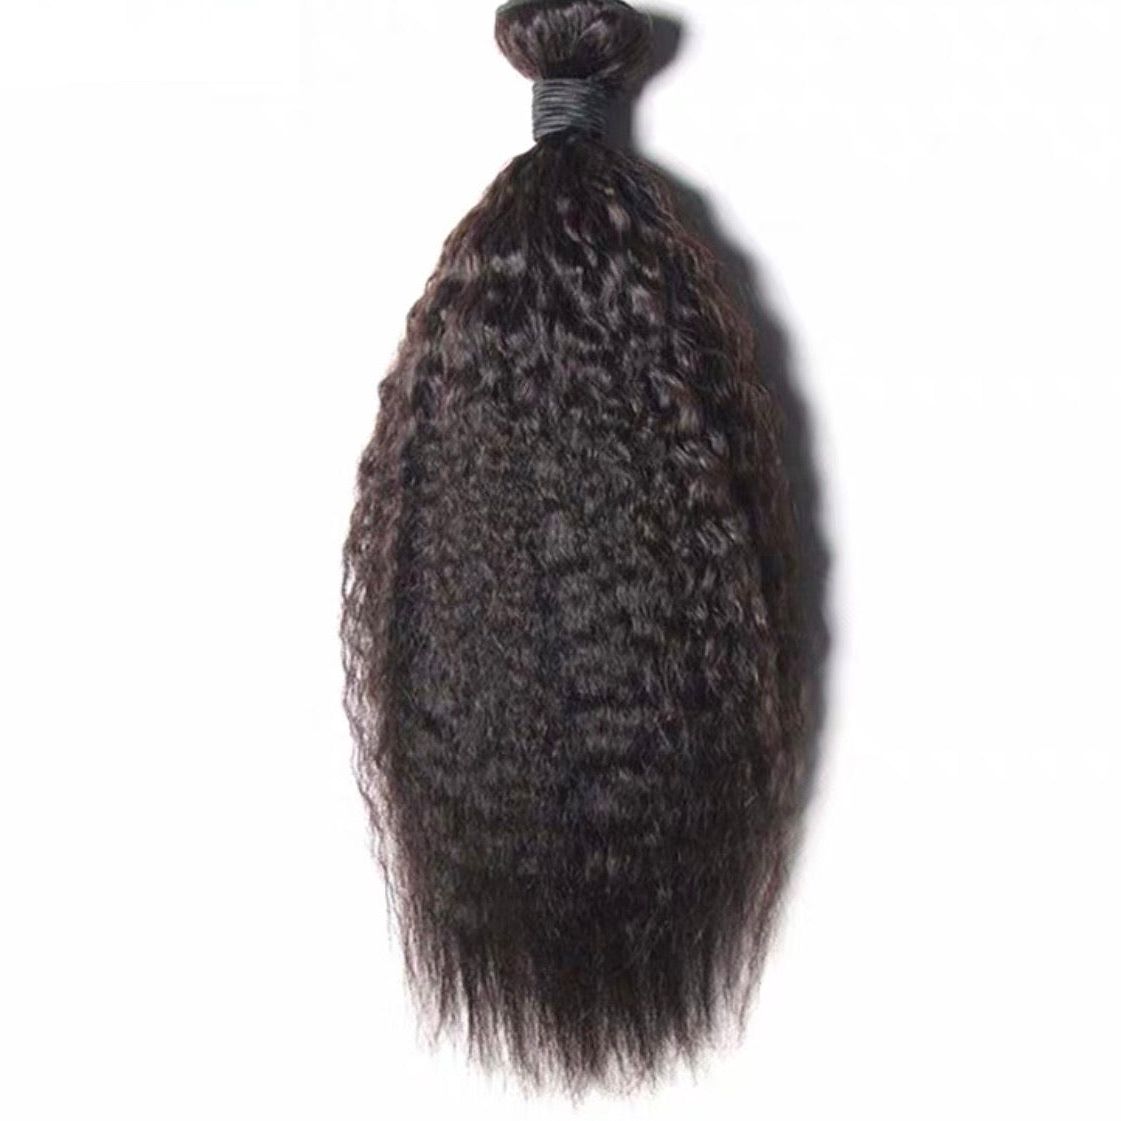 Afro Kinky Straight Human Hair Bundle Package